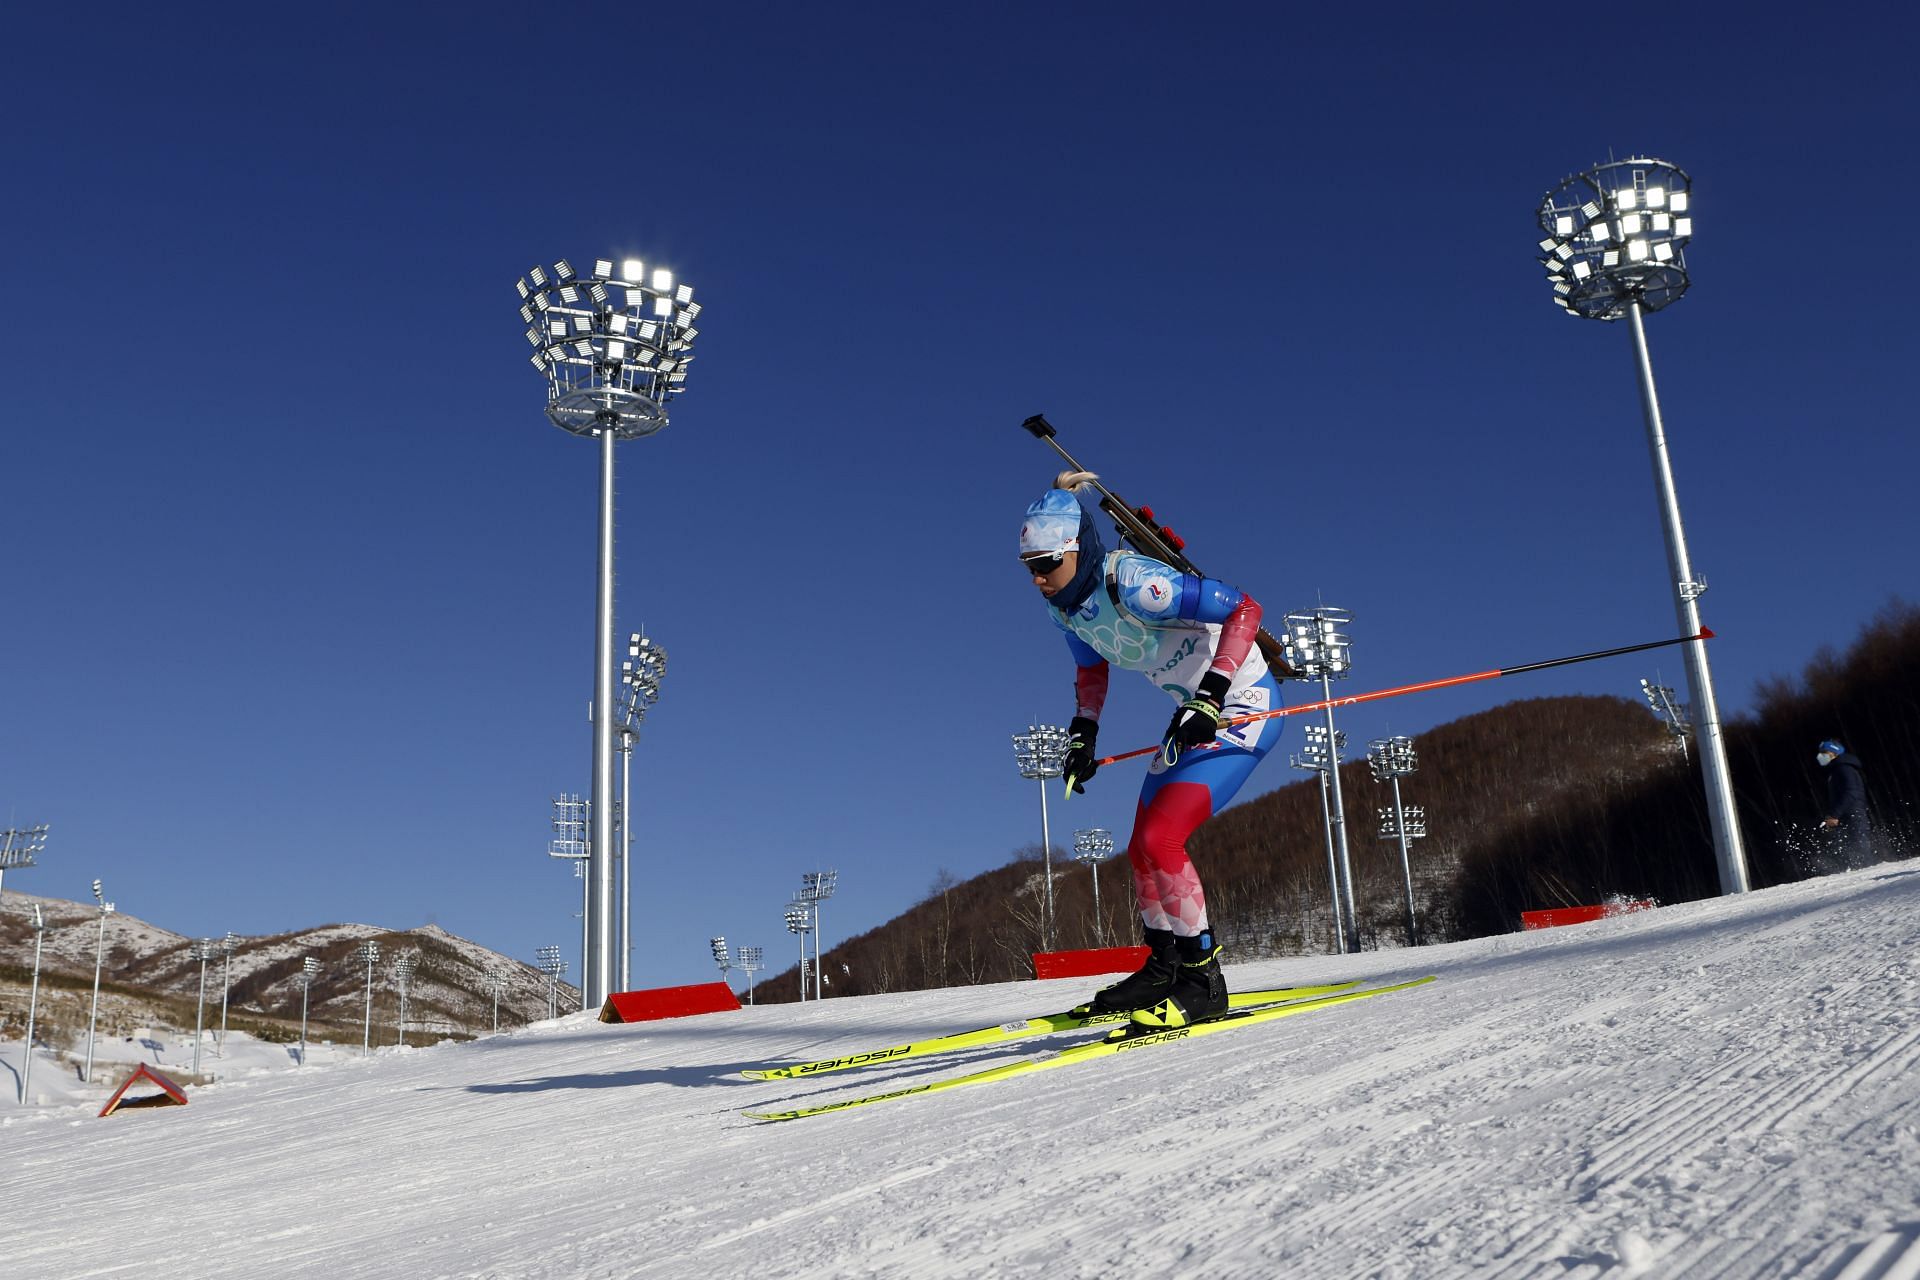 Biathlon - Winter Olympics: Team Russia athlete in action